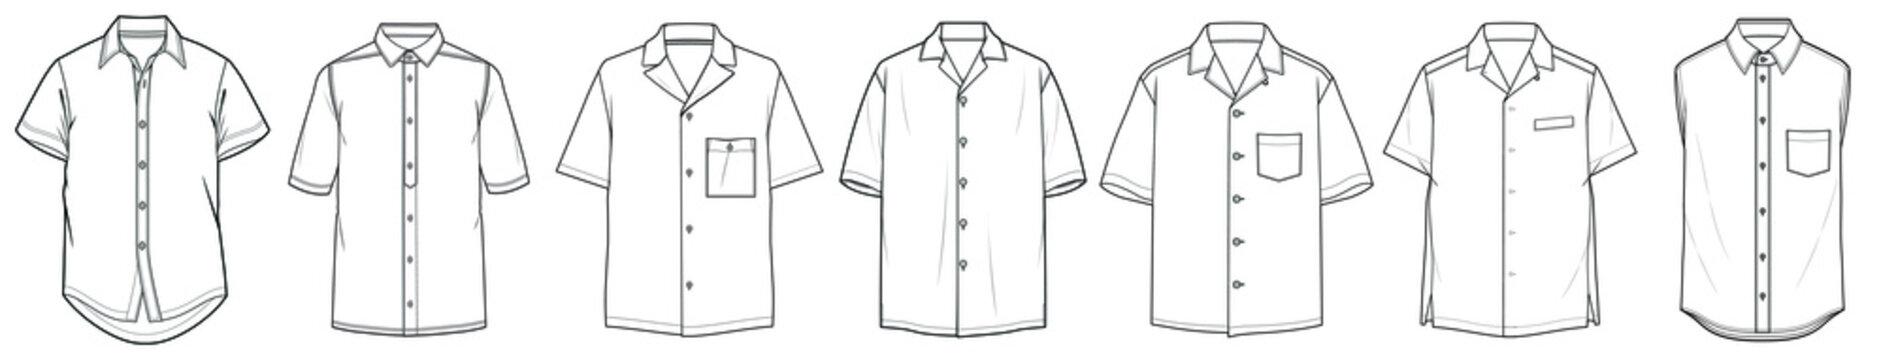 mens short sleeve shirts fashion flat sketch vector illustration